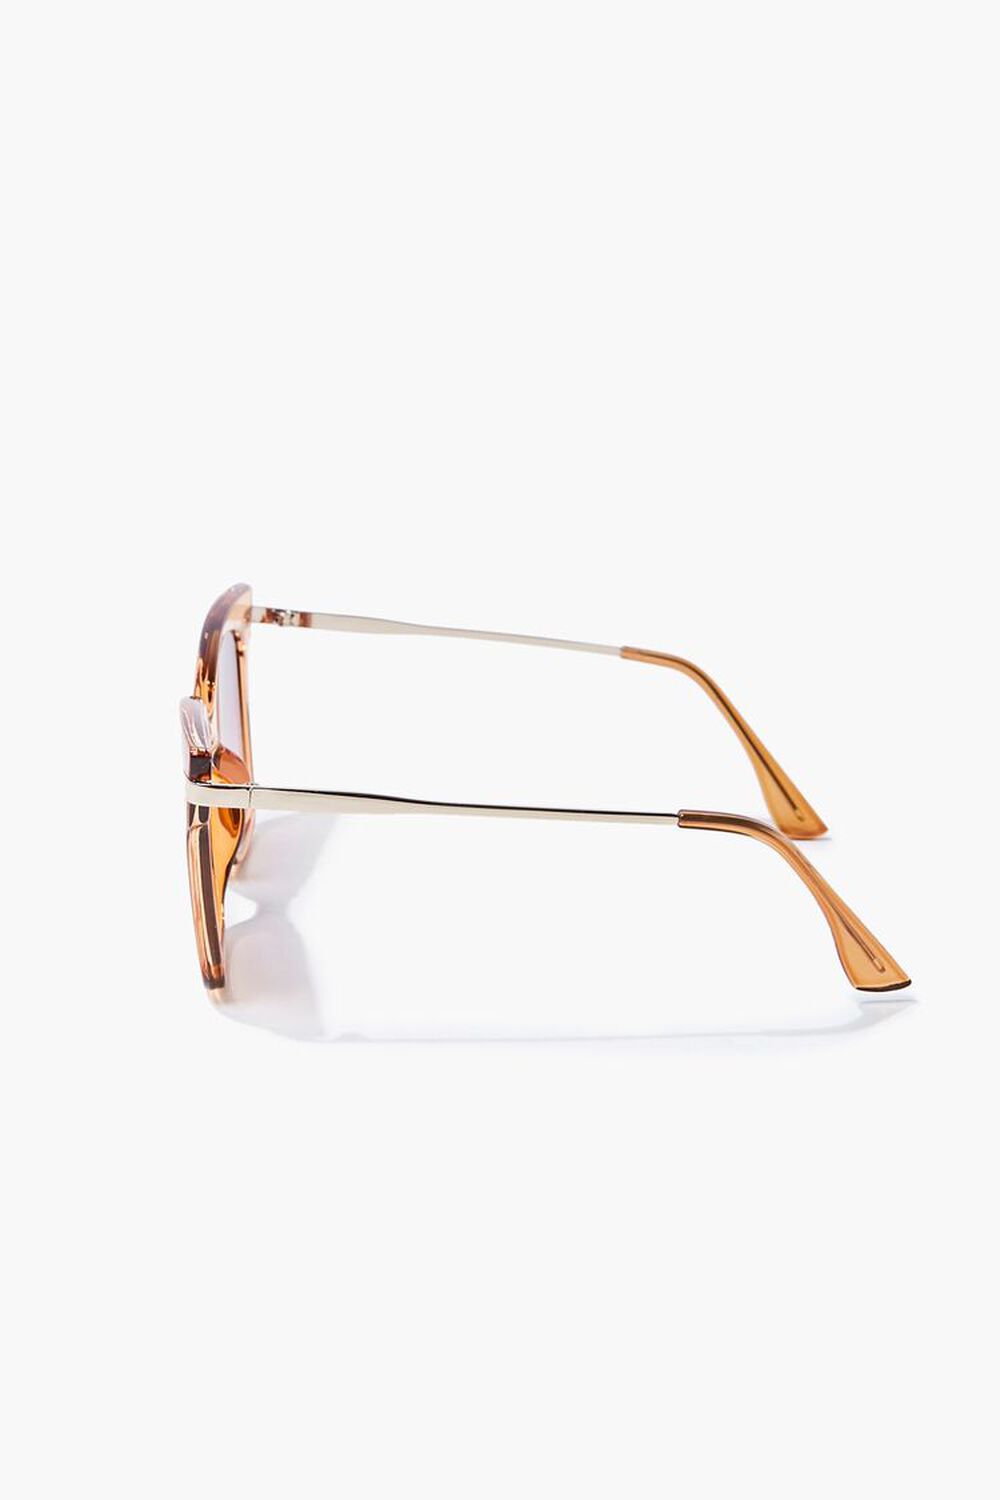 GOLD Semi-Transparent Ombre Square Sunglasses, image 3